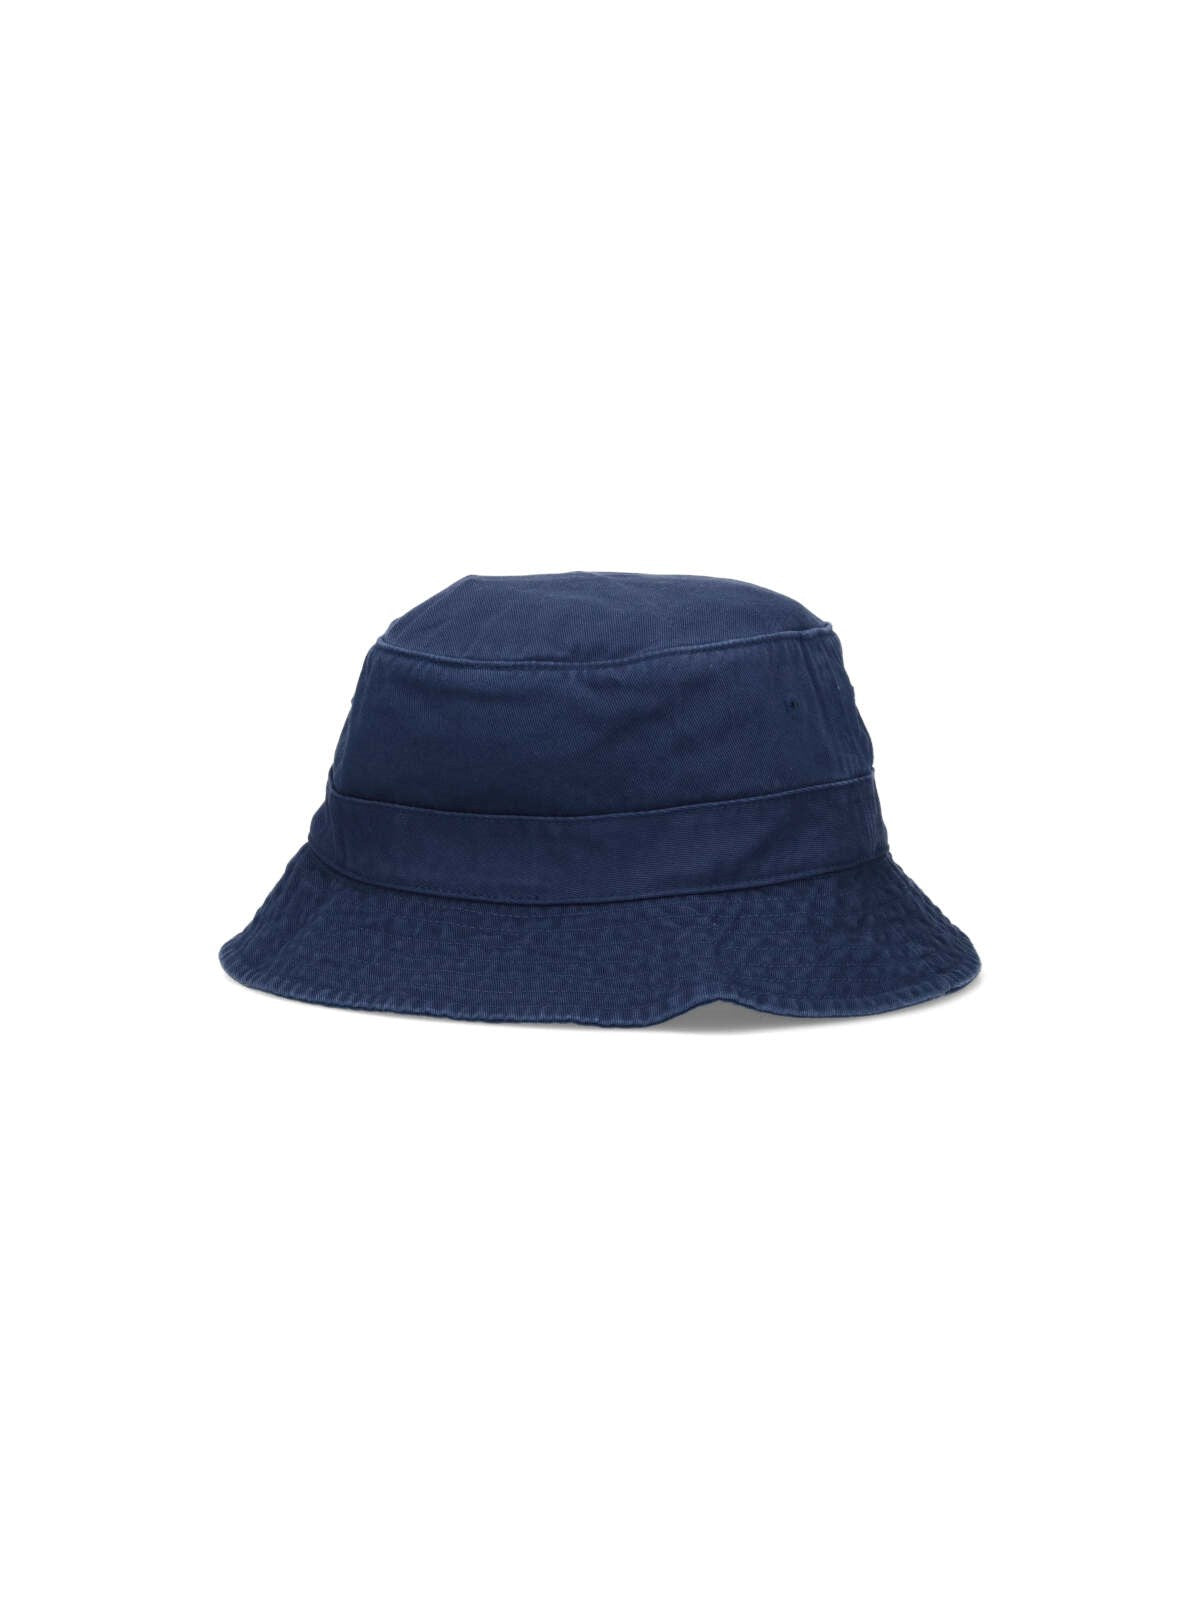 Polo Ralph Lauren Cappello bucket logo-cappelli-Polo Ralph Lauren-Cappello bucket logo Polo Ralph Lauren, in cotone blu, ricamo logo rosso fronte, visiera.-Dresso